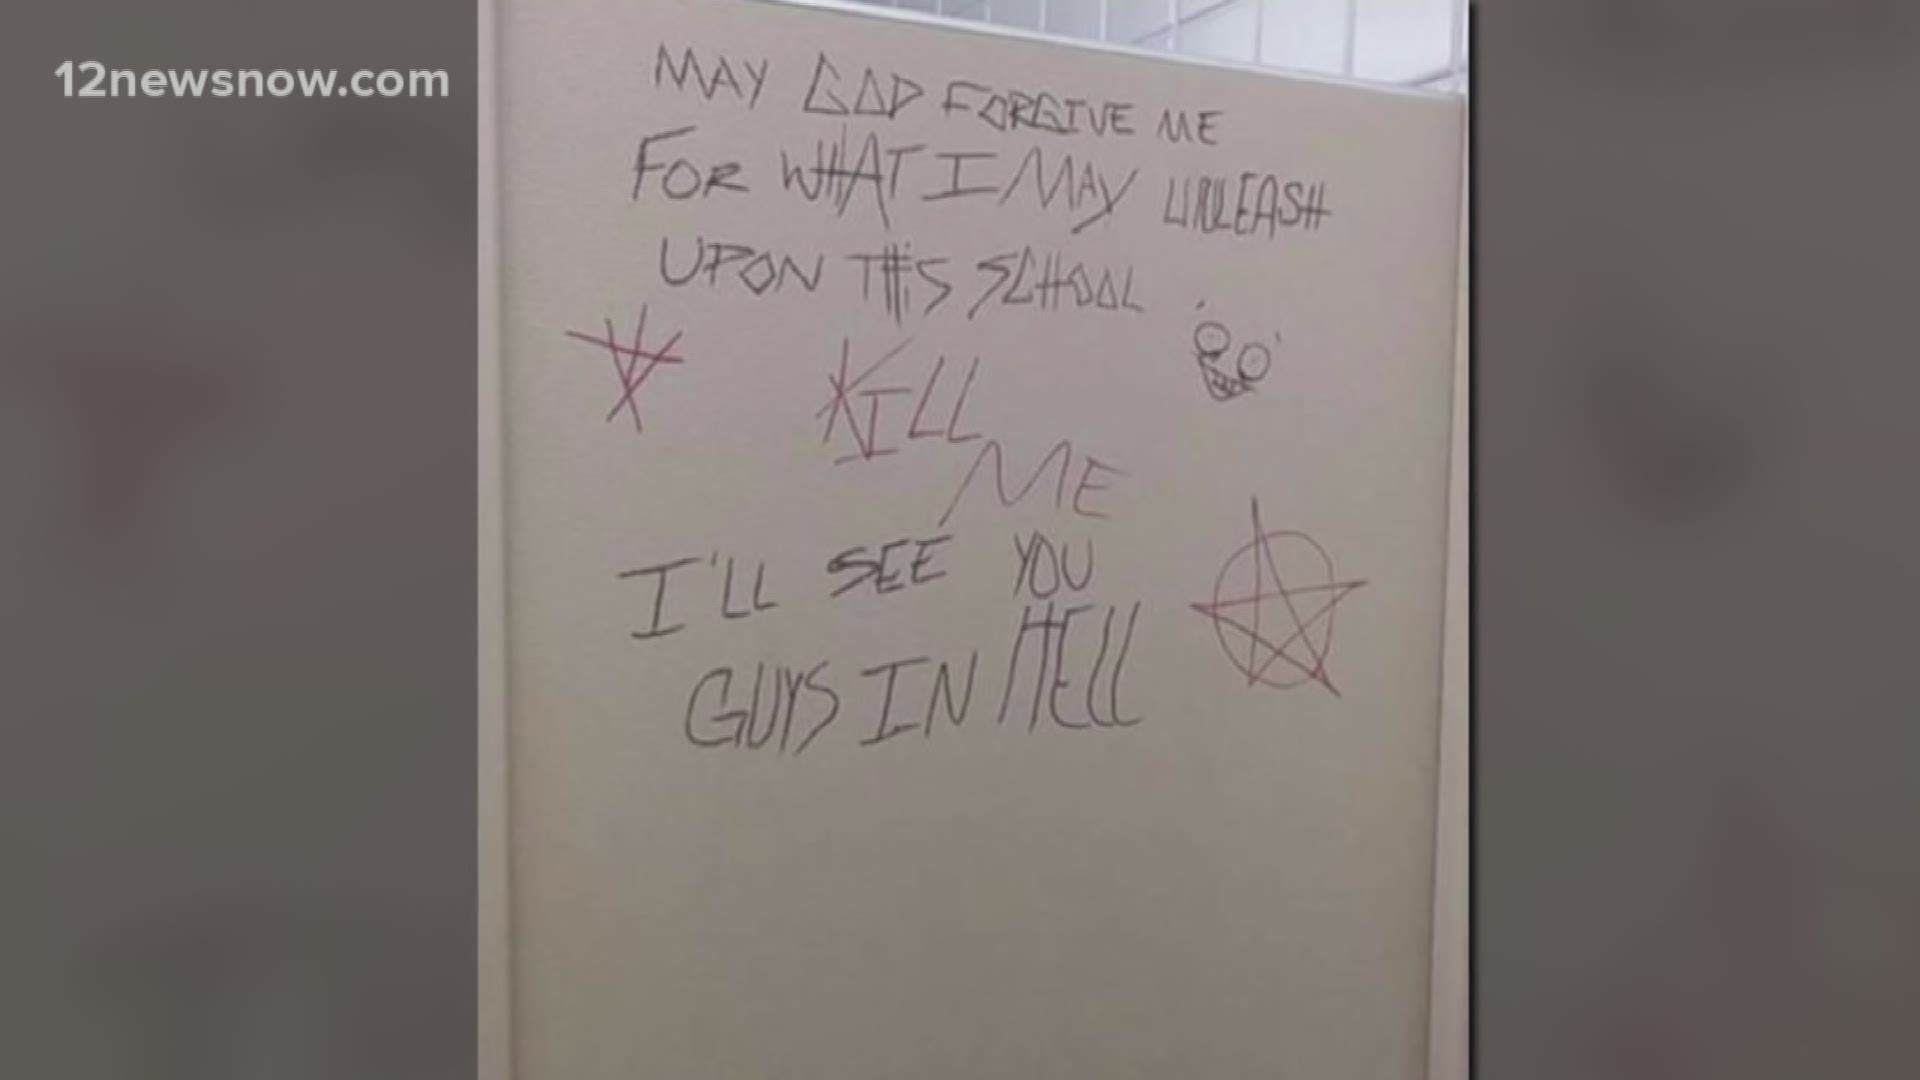 Graffiti threatening violence found inside Vidor High School bathroom, district investigating